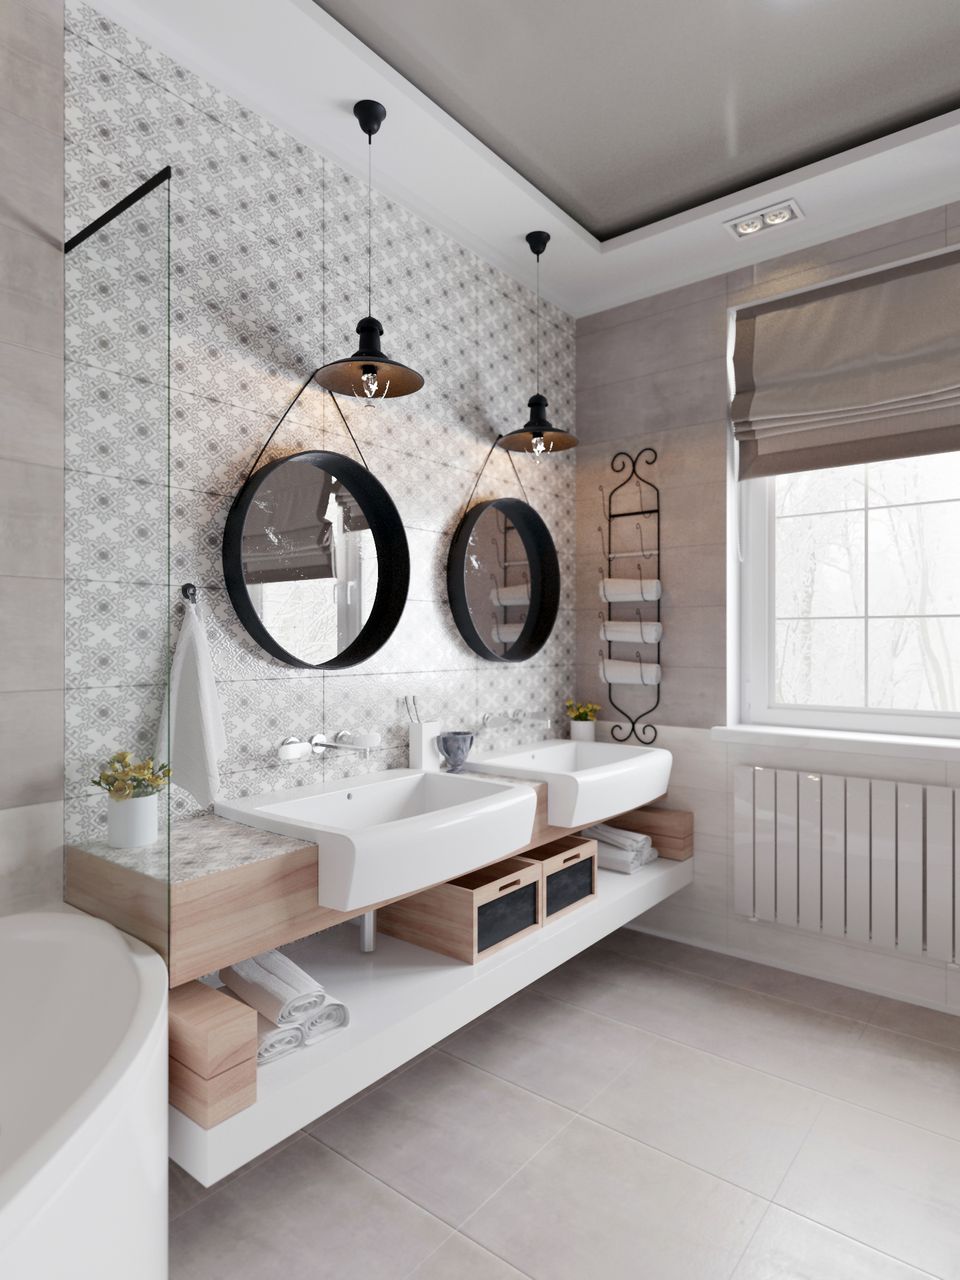 11 Mesmerizing Scandinavian Bathroom Design Ideas ➤ To see more news about Luxury Bathrooms in the world visit us at http://luxurybathrooms.eu/ #luxurybathrooms #interiordesign #homedecor @BathroomsLuxury @bocadolobo @delightfulll @brabbu @essentialhomeeu @circudesign @mvalentinabath @luxxu @covethouse_